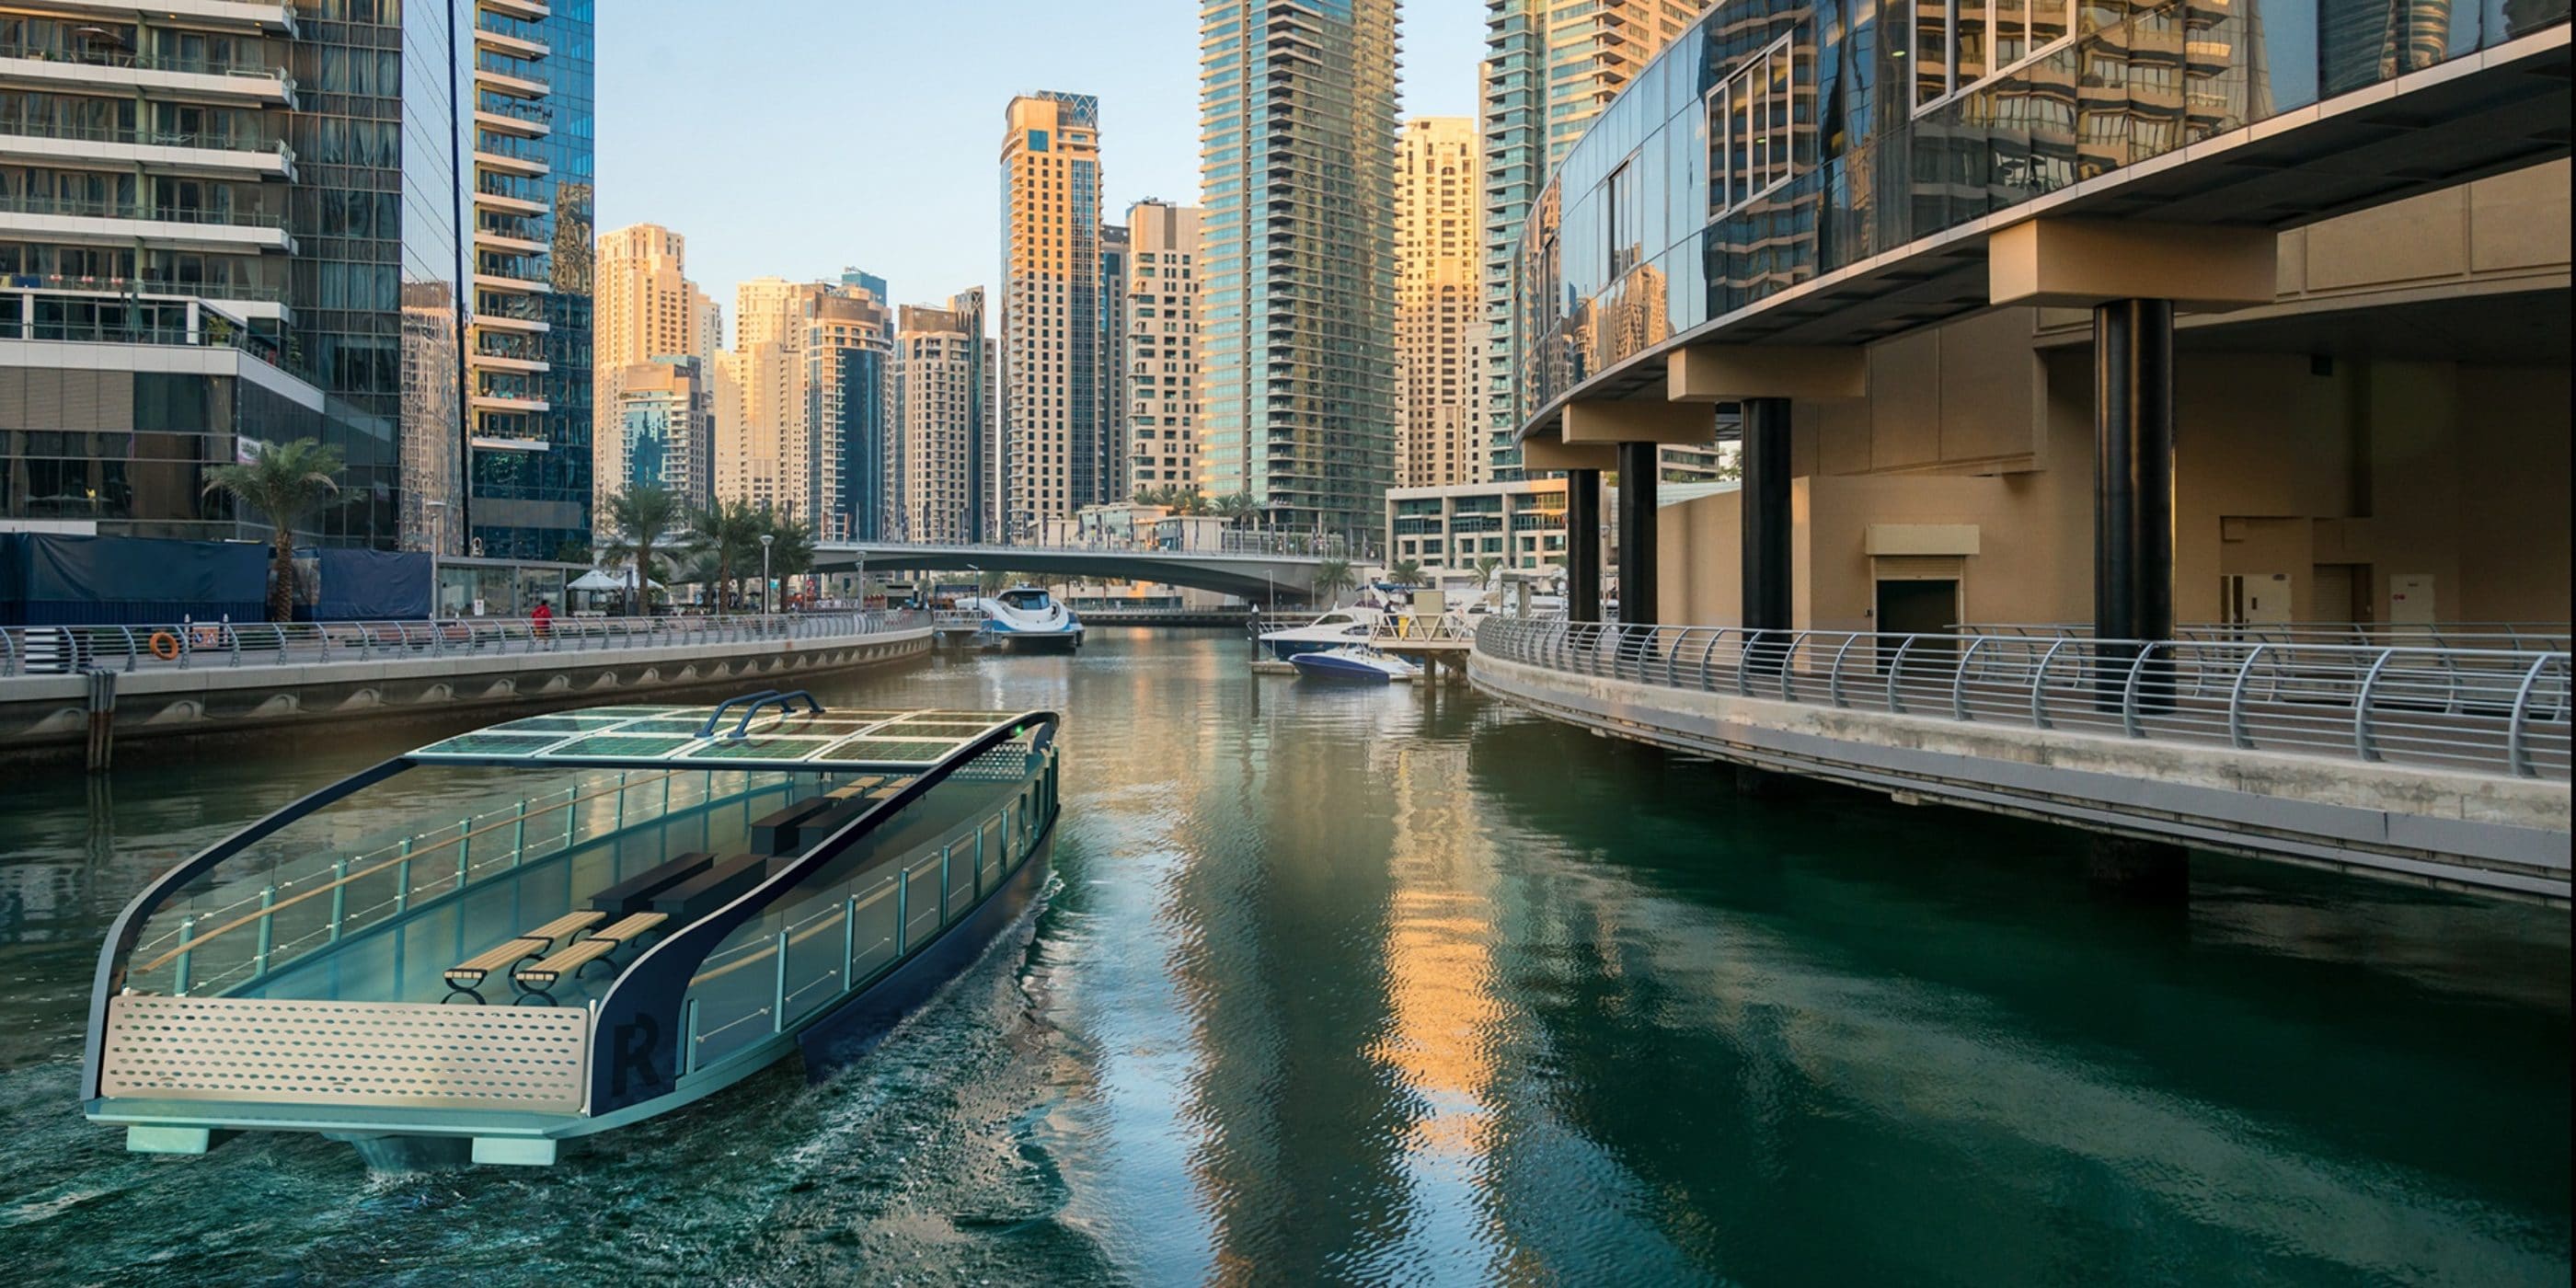 Urban Waterways: The Next Generation of Autonomous Transportation